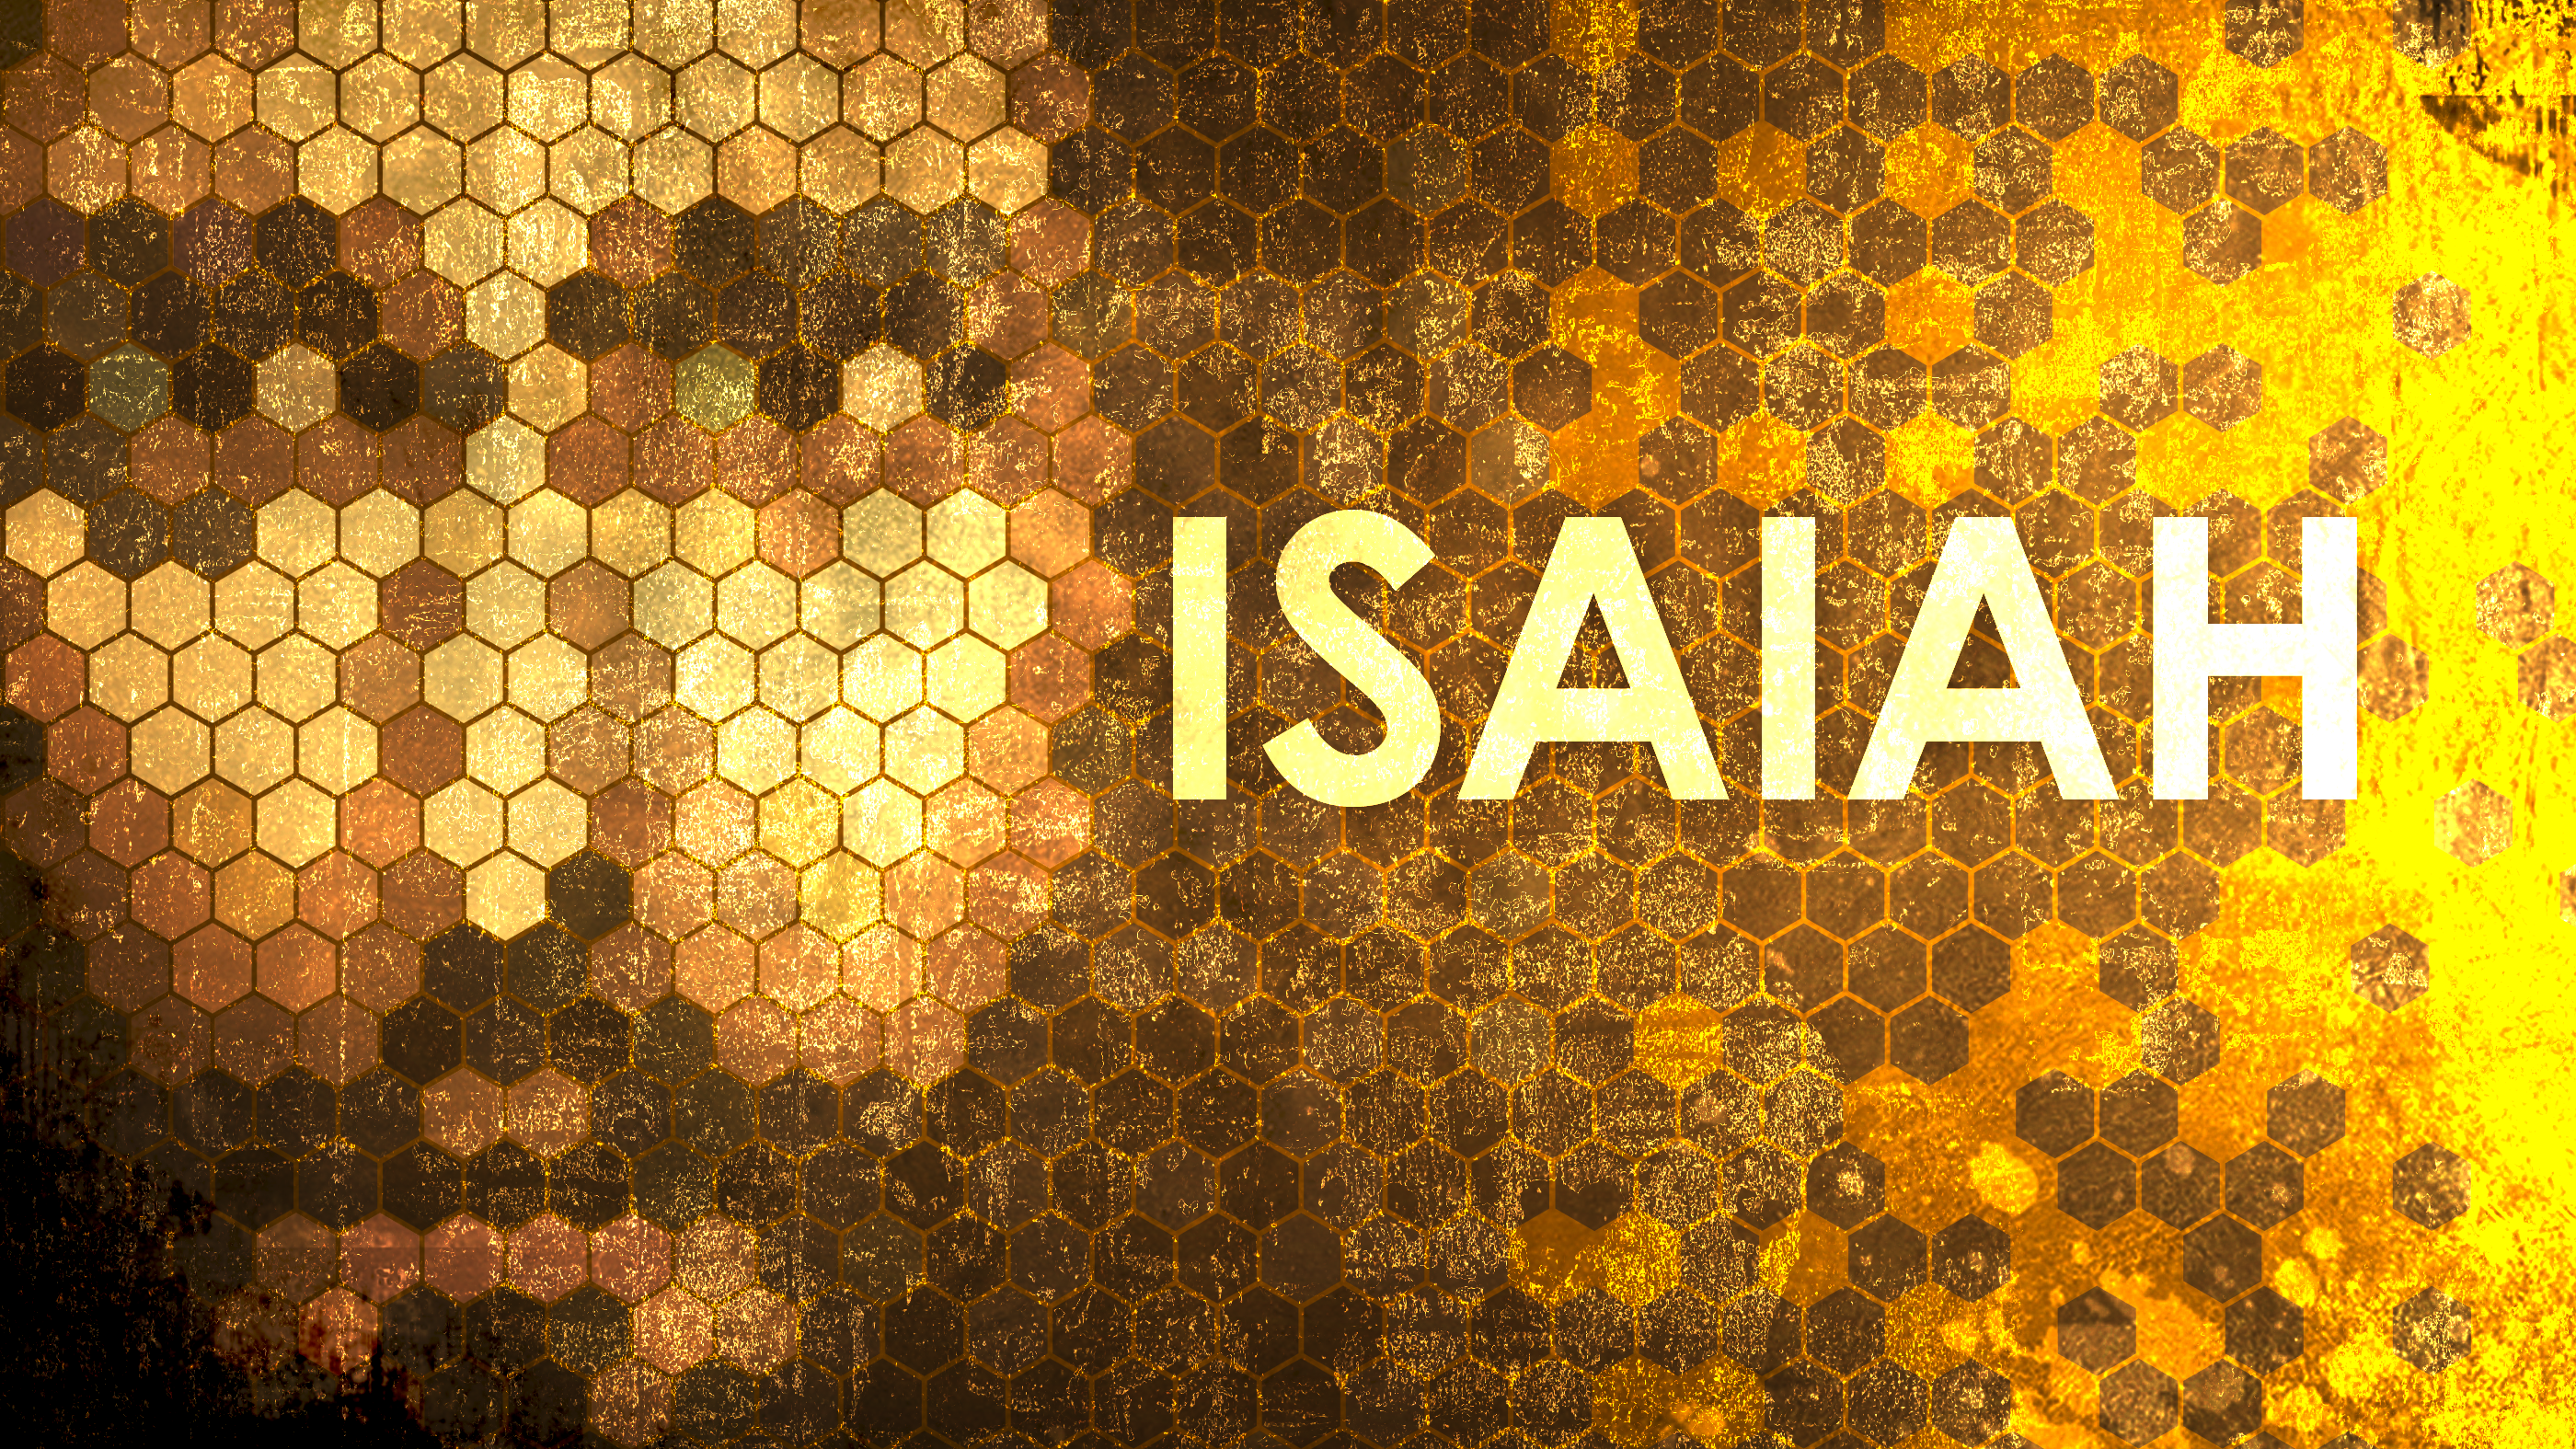 Isaiah 53 Image